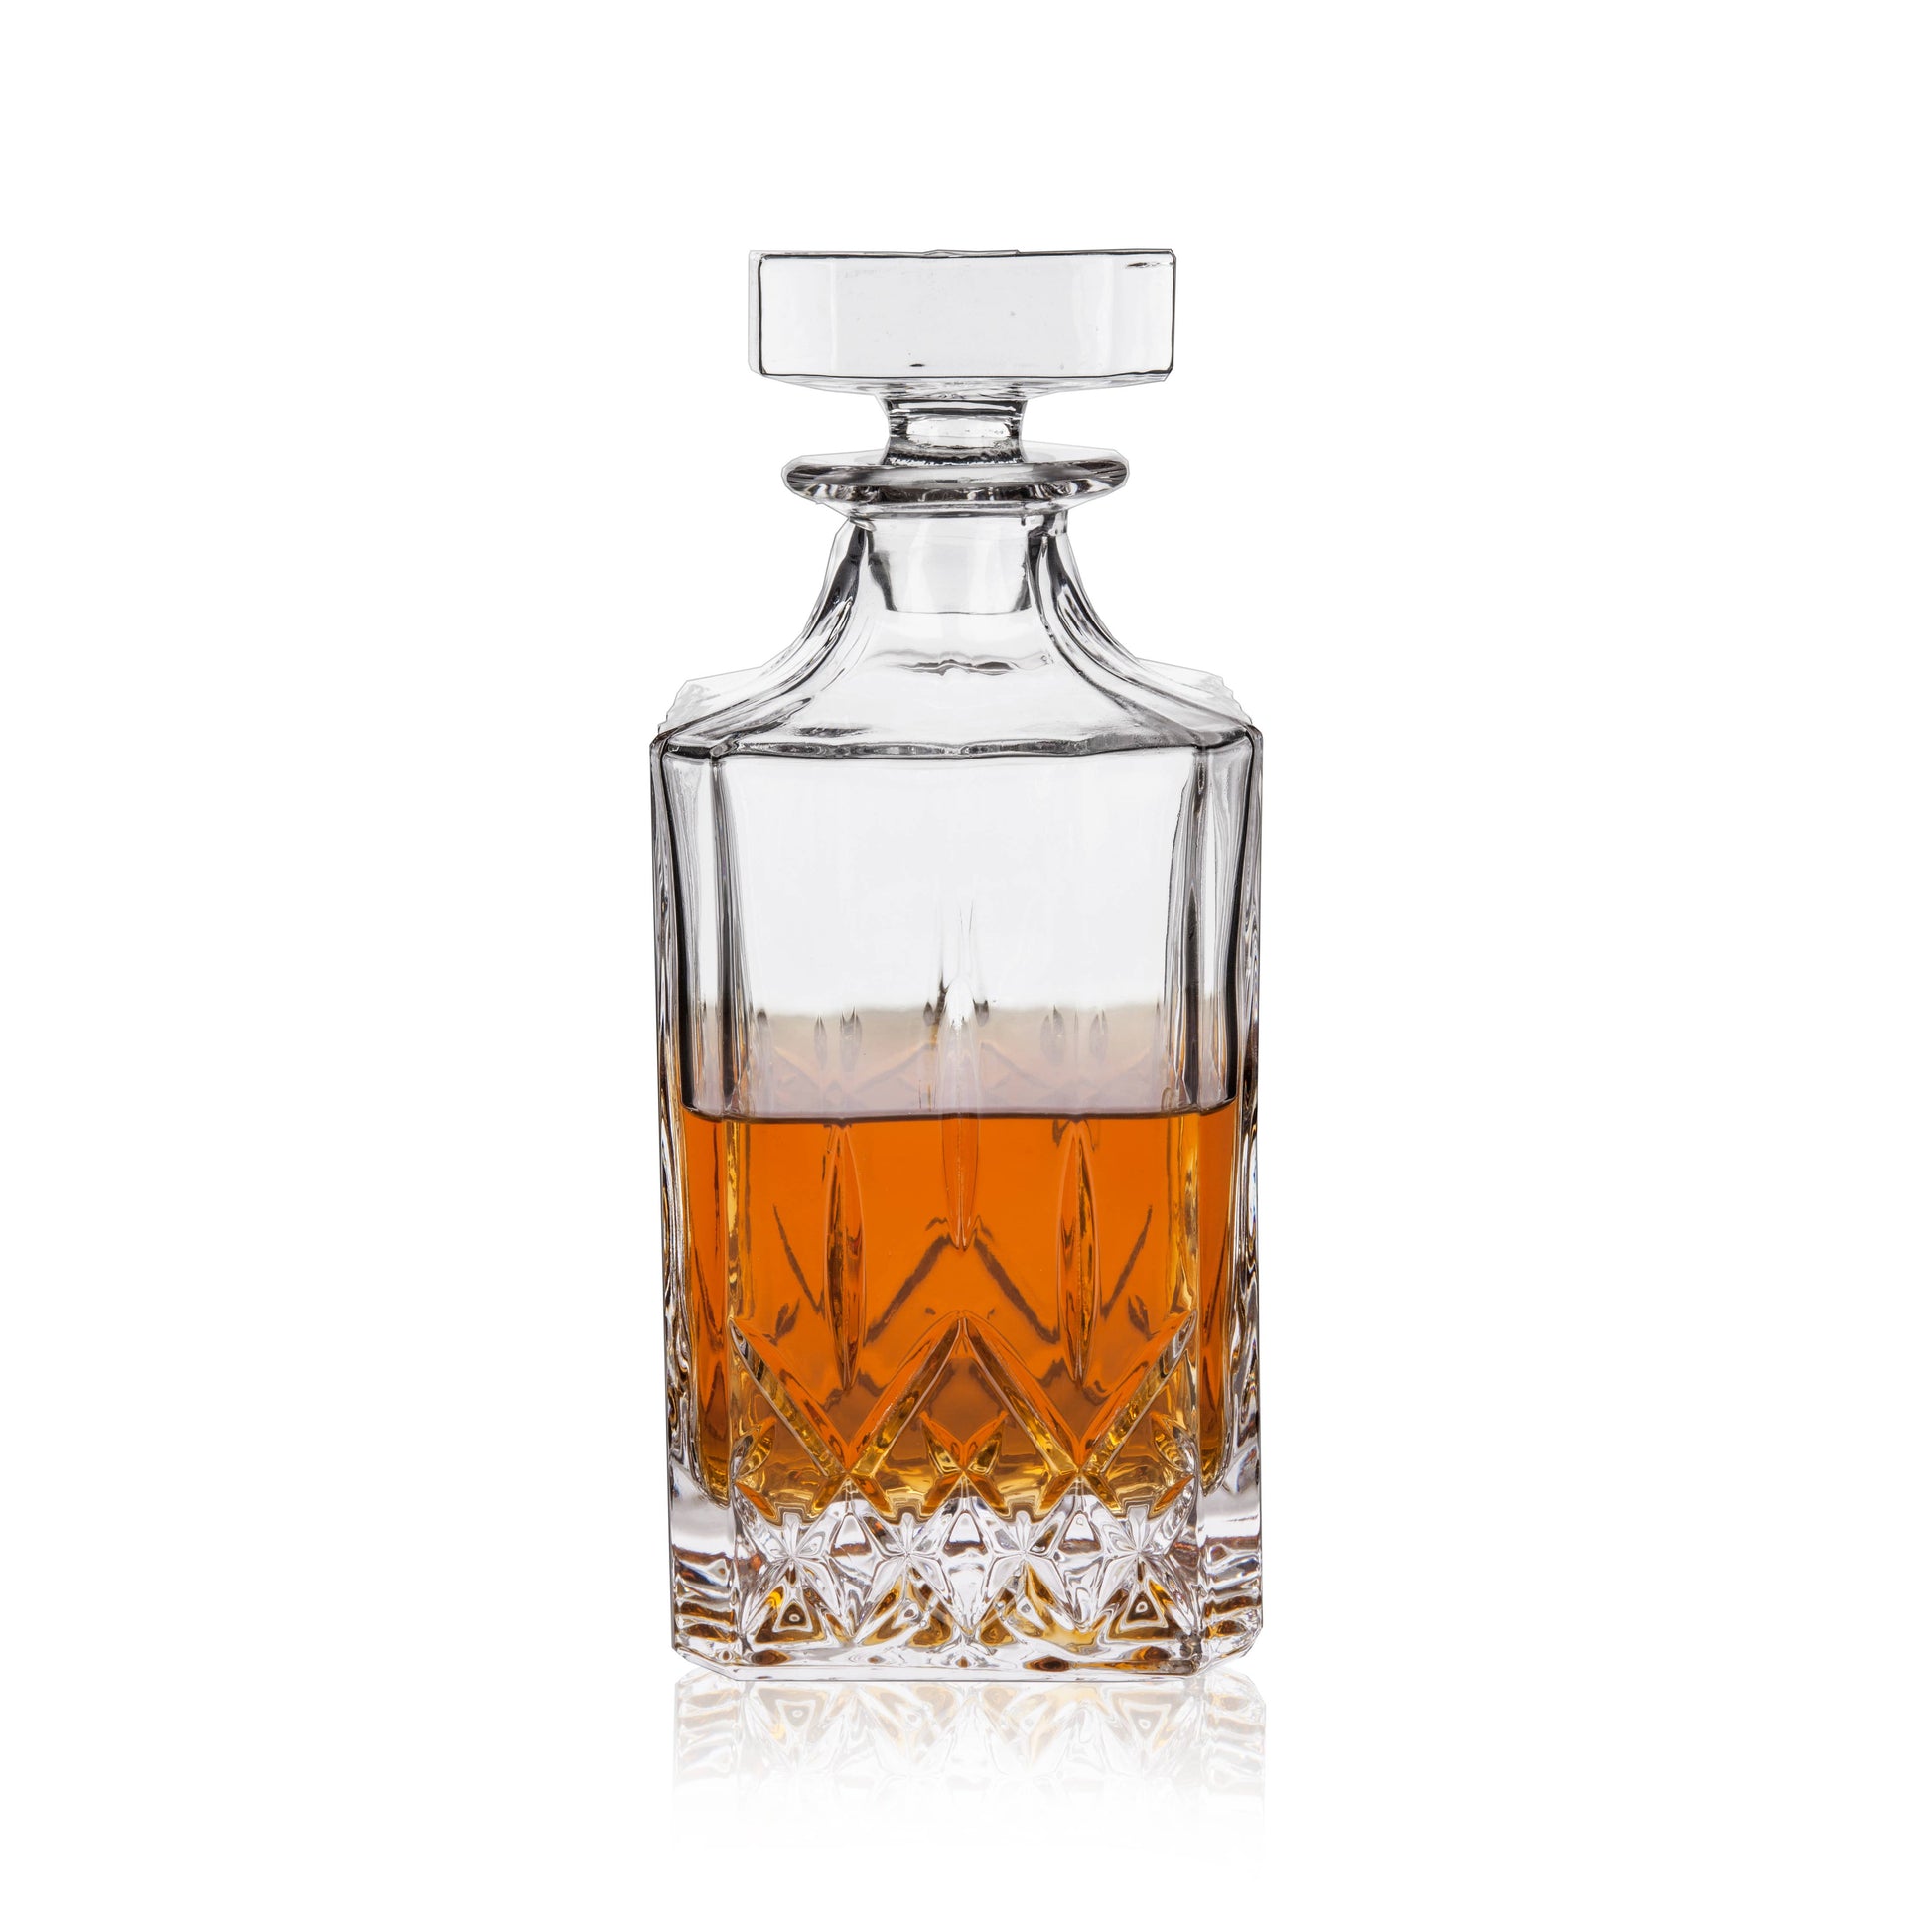 Admiral™ Liquor Decanter by Viski